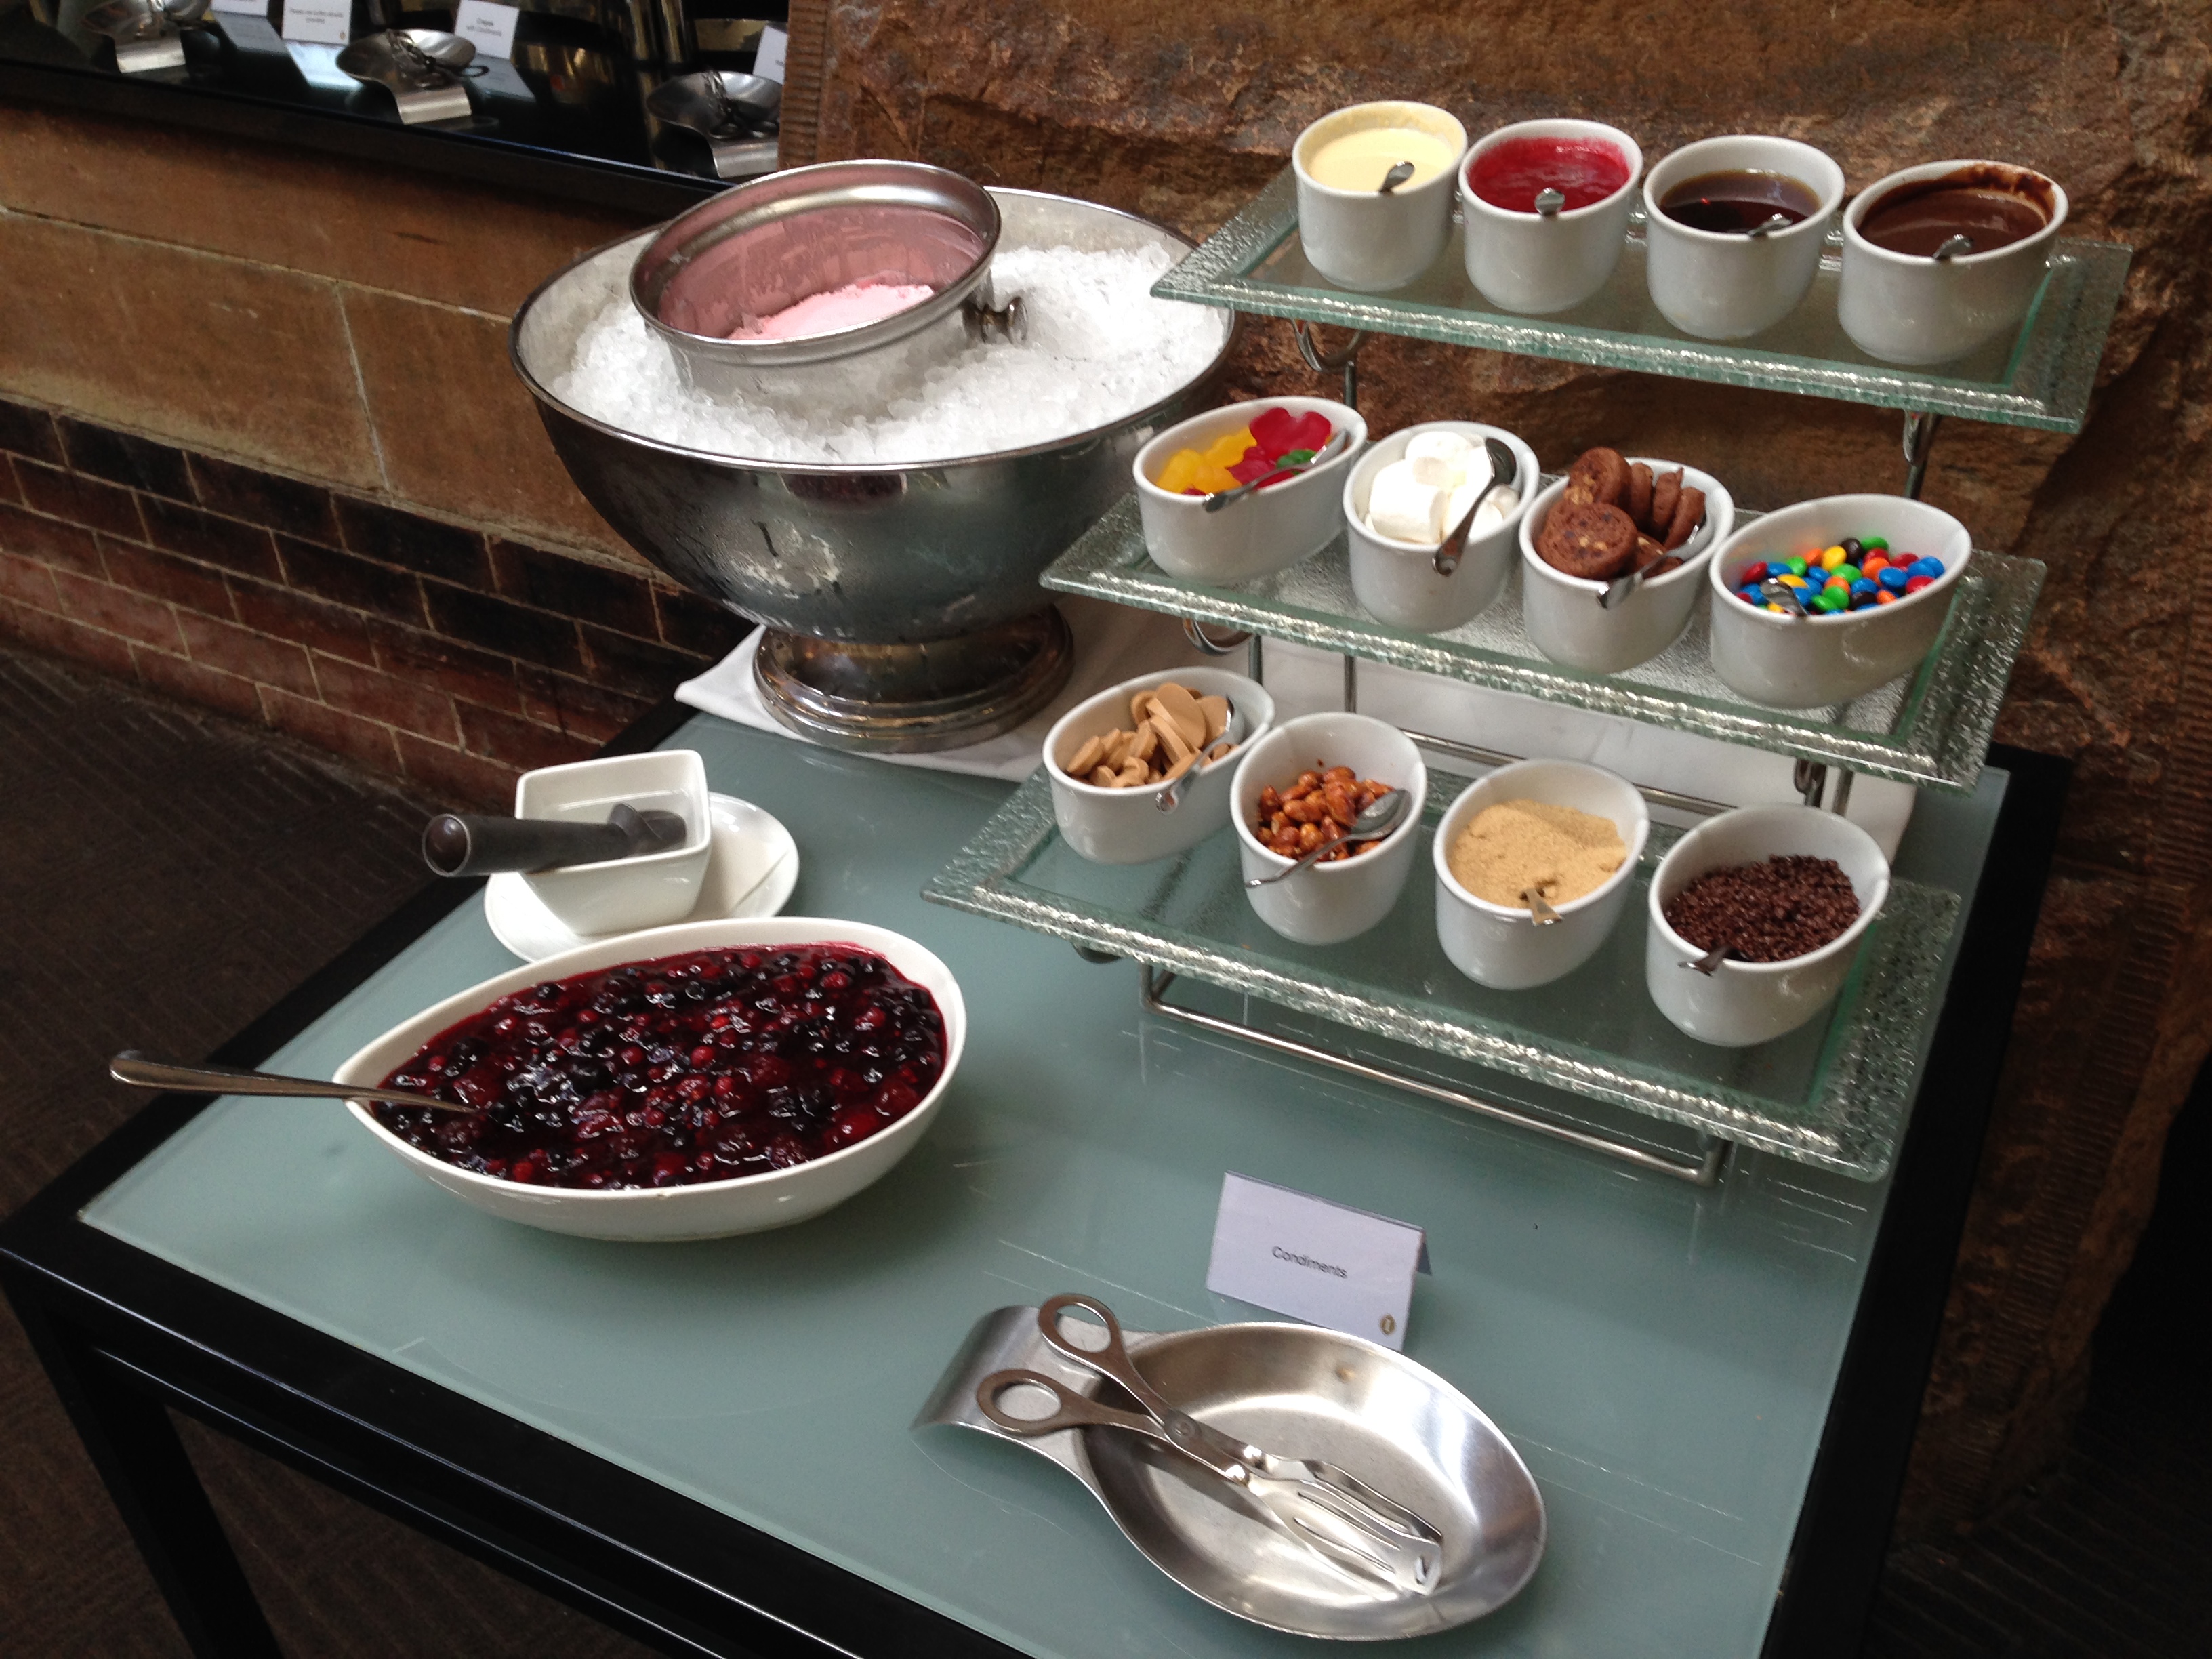 Tea service snack display